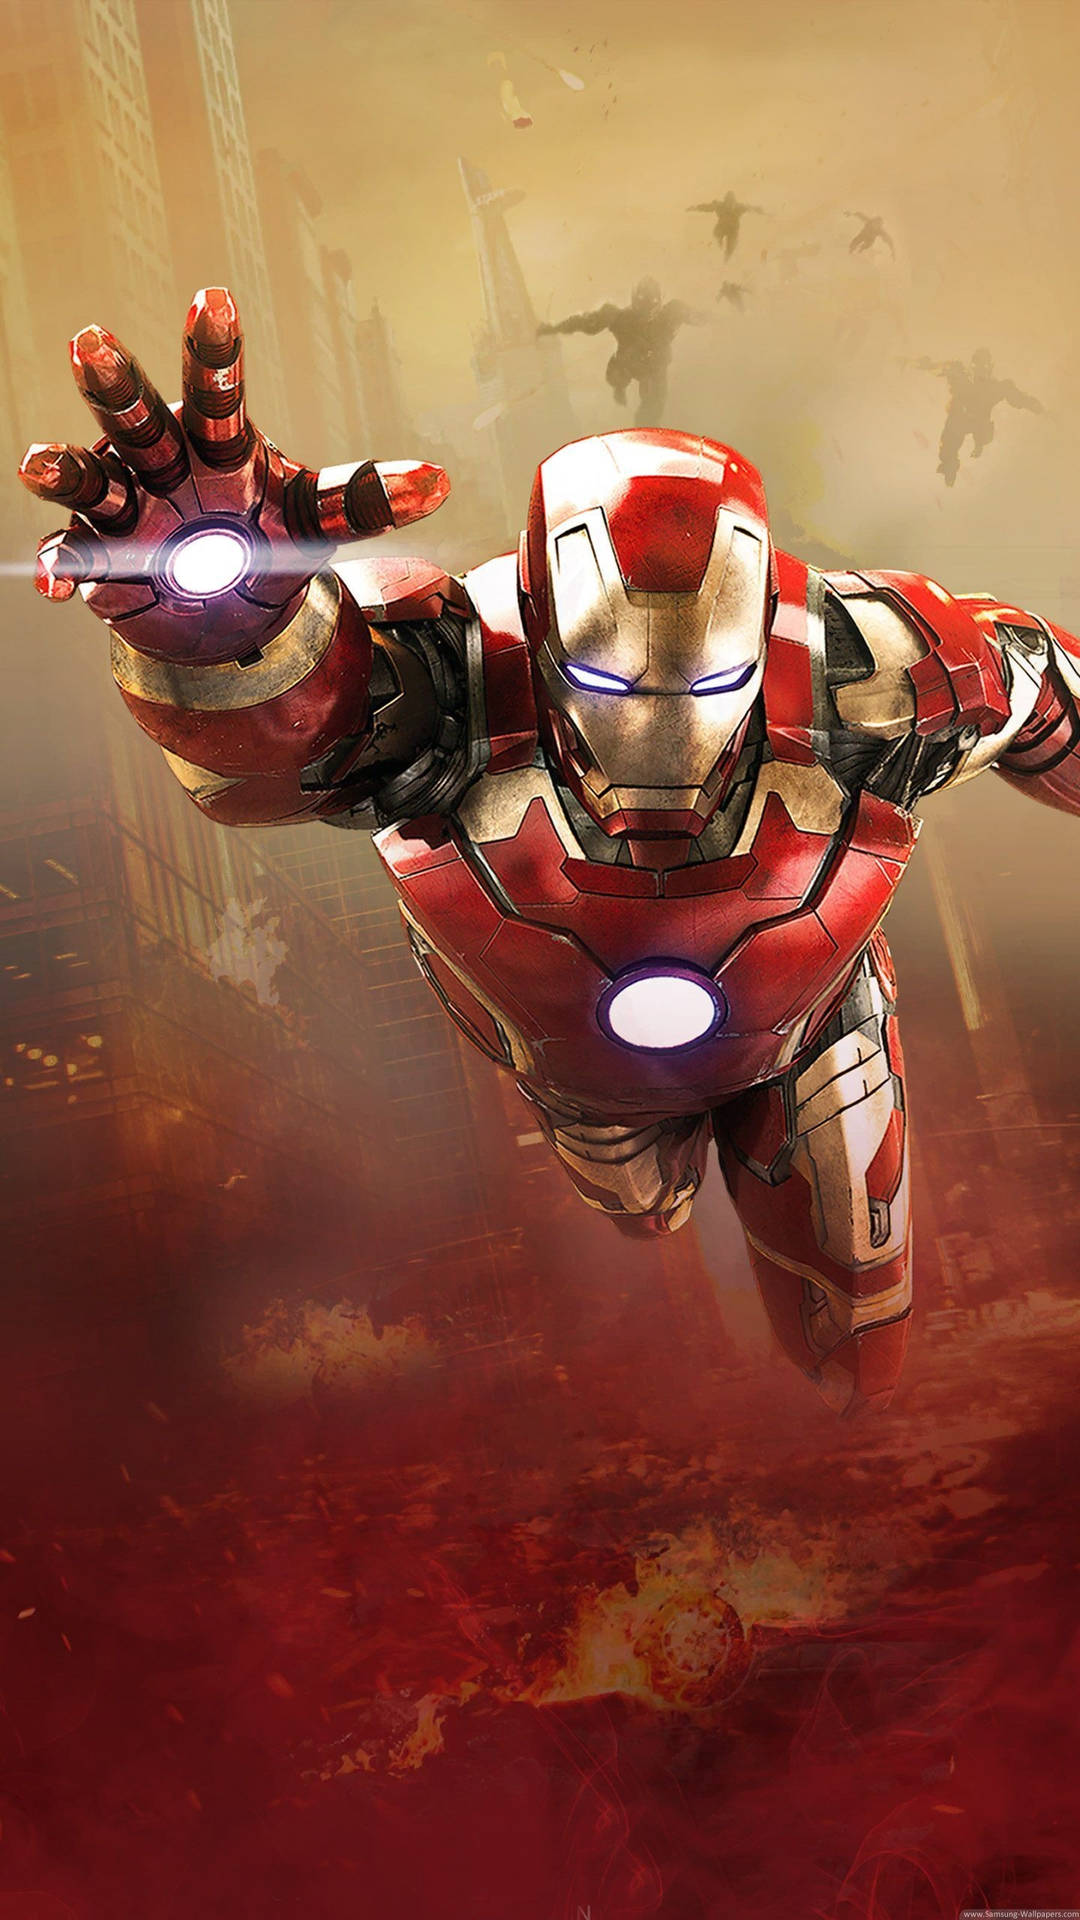 Iron Man Wallpaper Discover more Avengers Infinity War Iron Man  Superhero wallpape  Imagenes de iron man Fondo de pantalla de iron man  Personajes de iron man